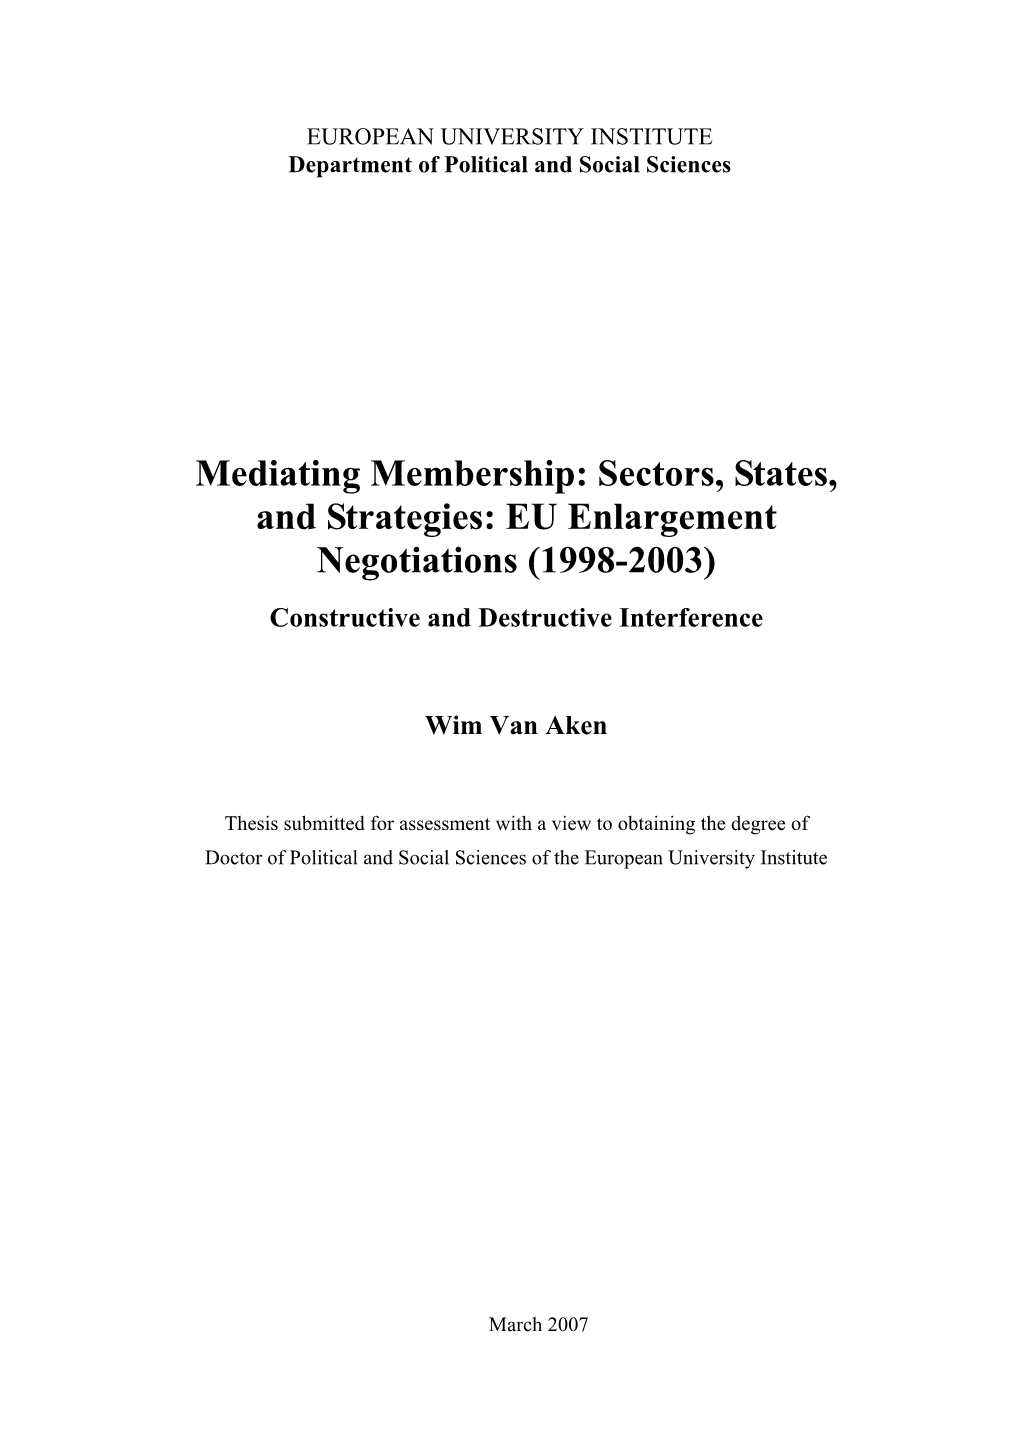 Sectors, States, and Strategies: EU Enlargement Negotiations (1998-2003) Constructive and Destructive Interference